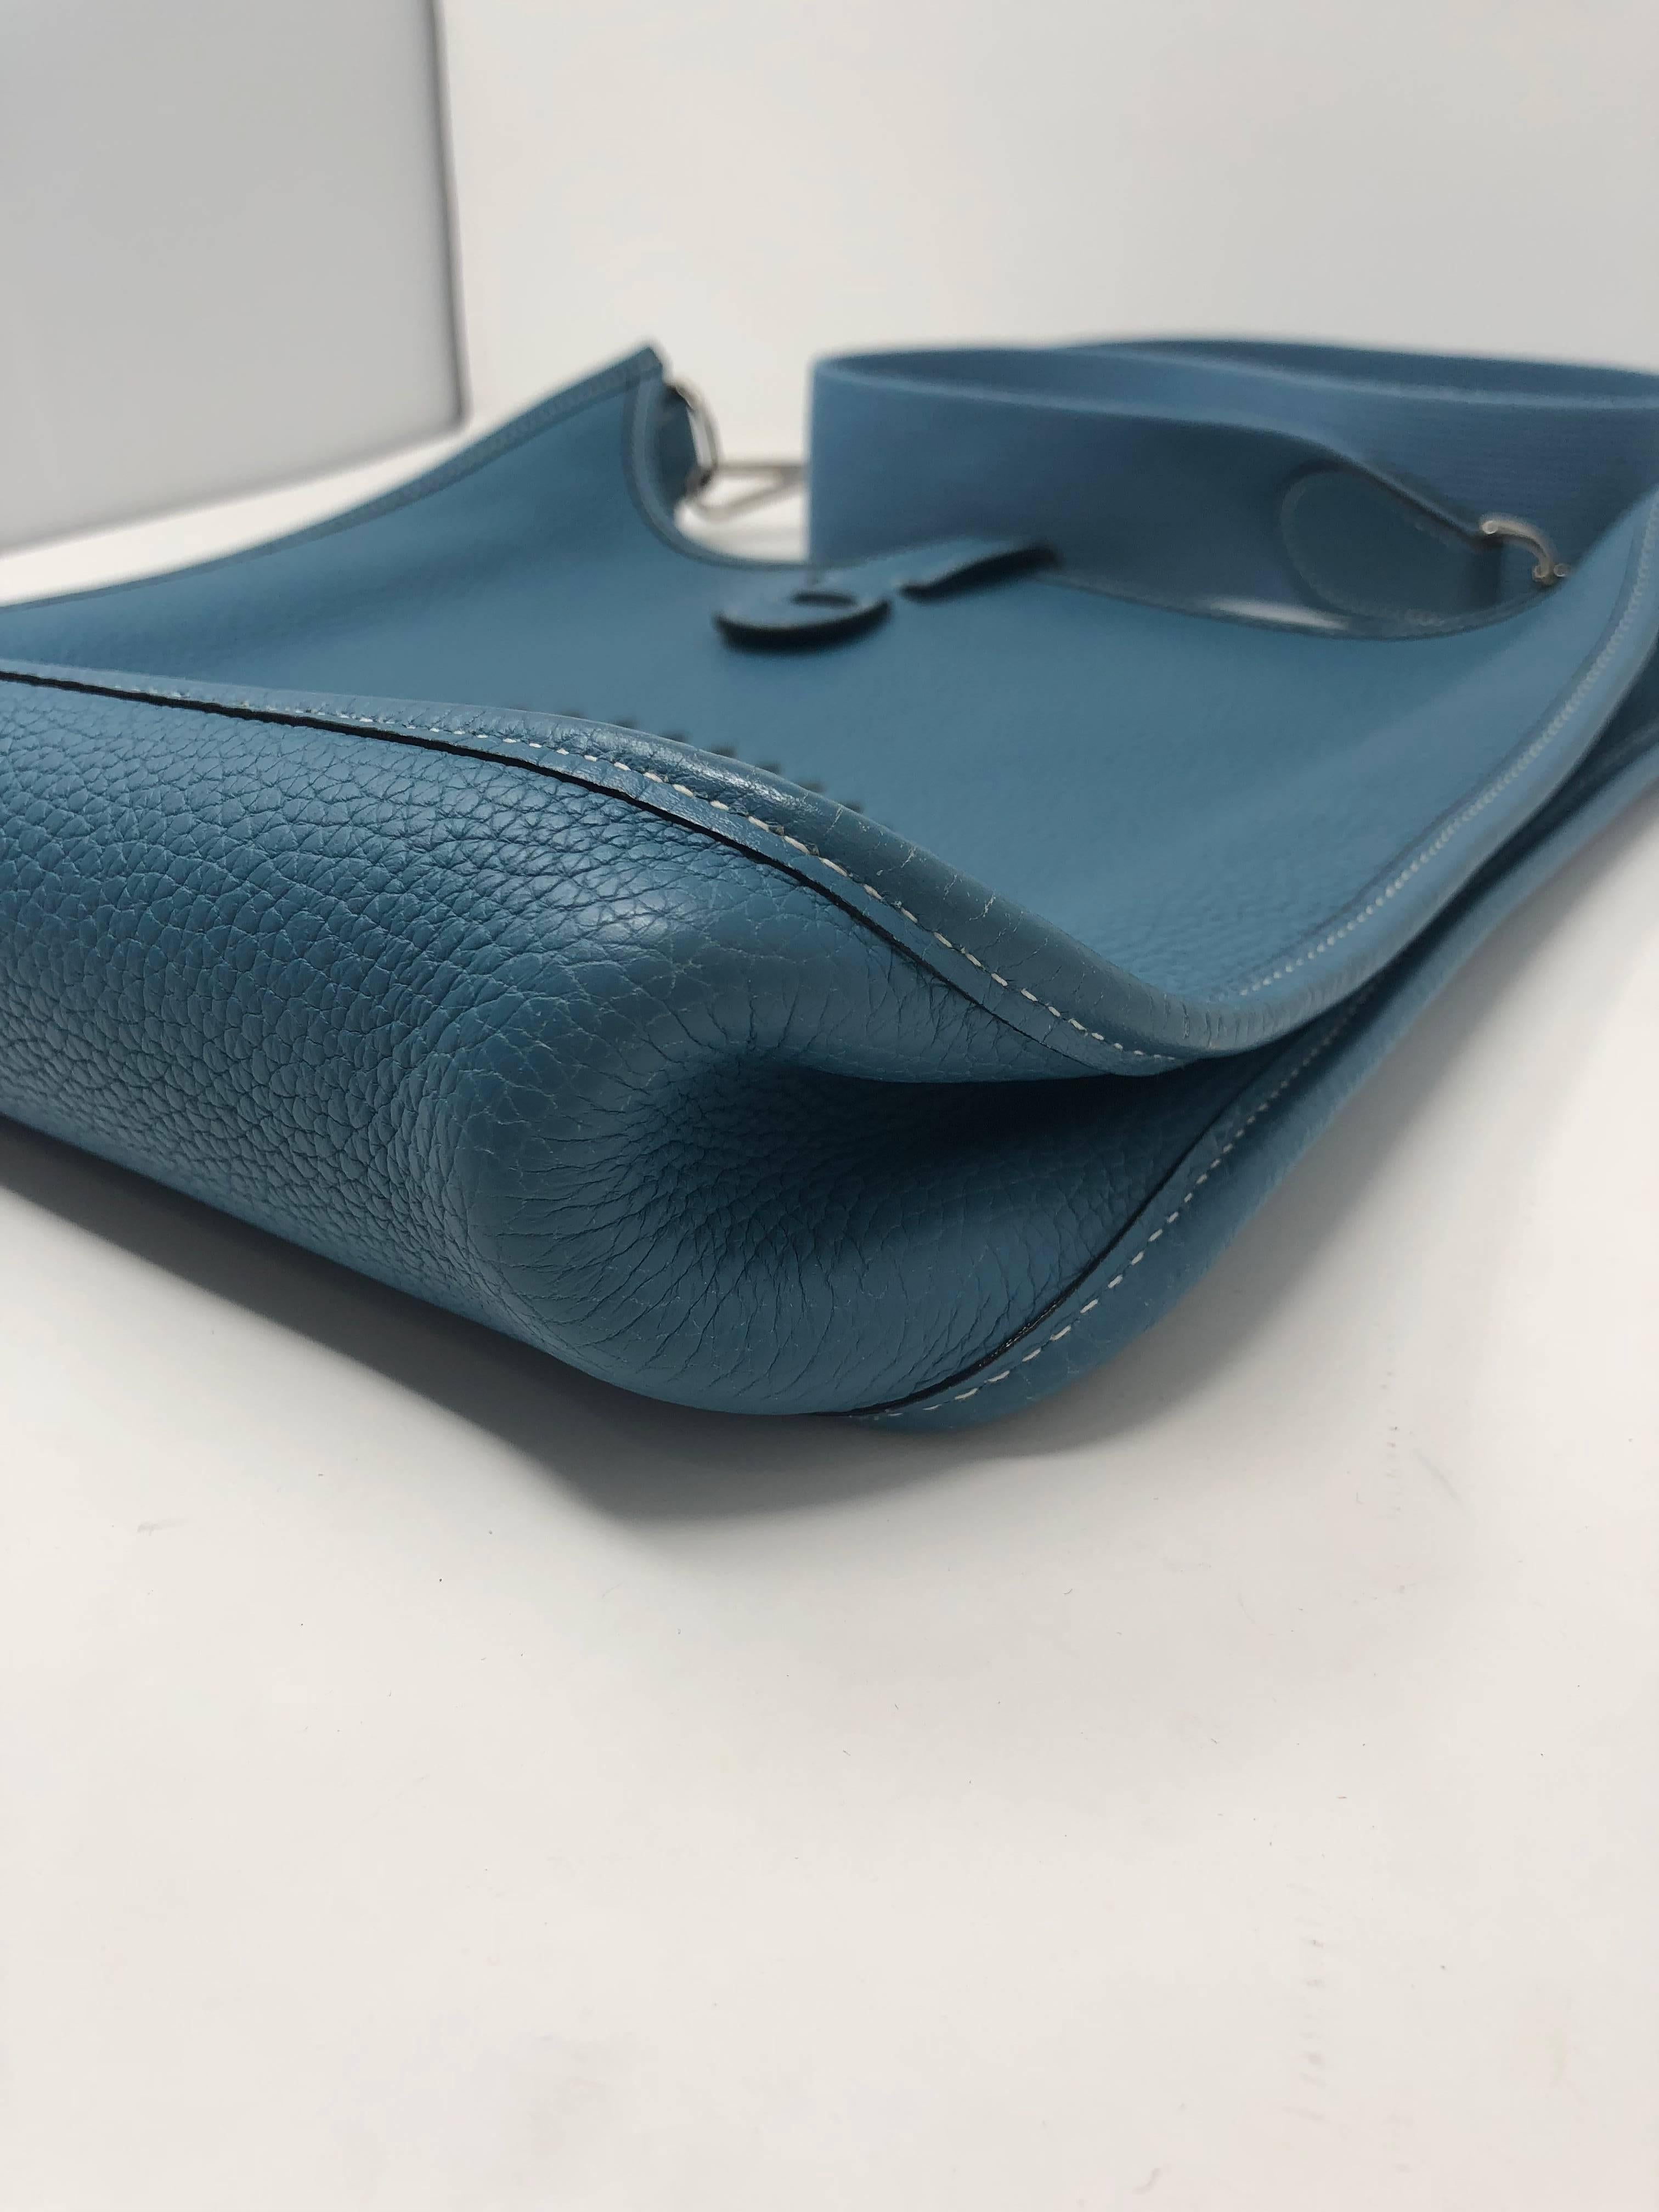 First edition Hermes Evelyne GM bag in blue jean color. 